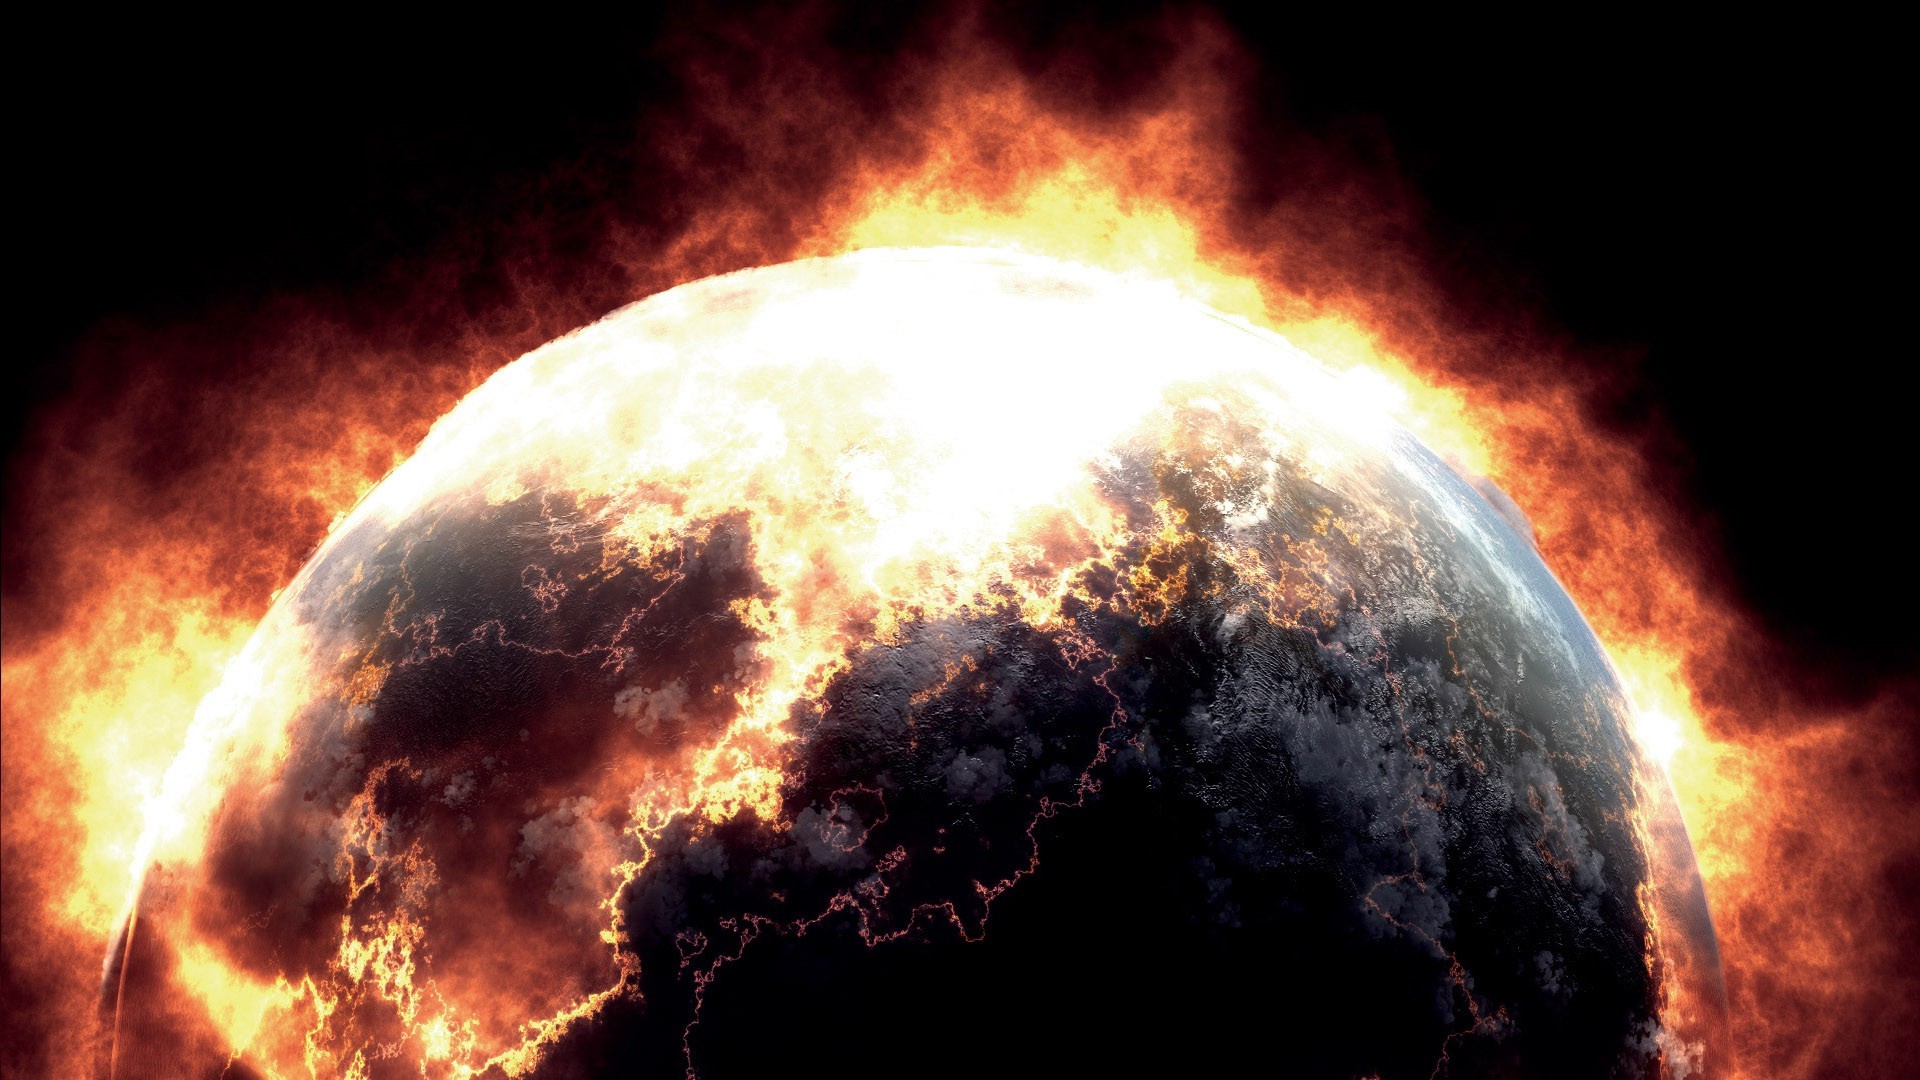 Digital Art Space Fire Planet Destruction Wallpapers Hd Desktop And Mobile Backgrounds